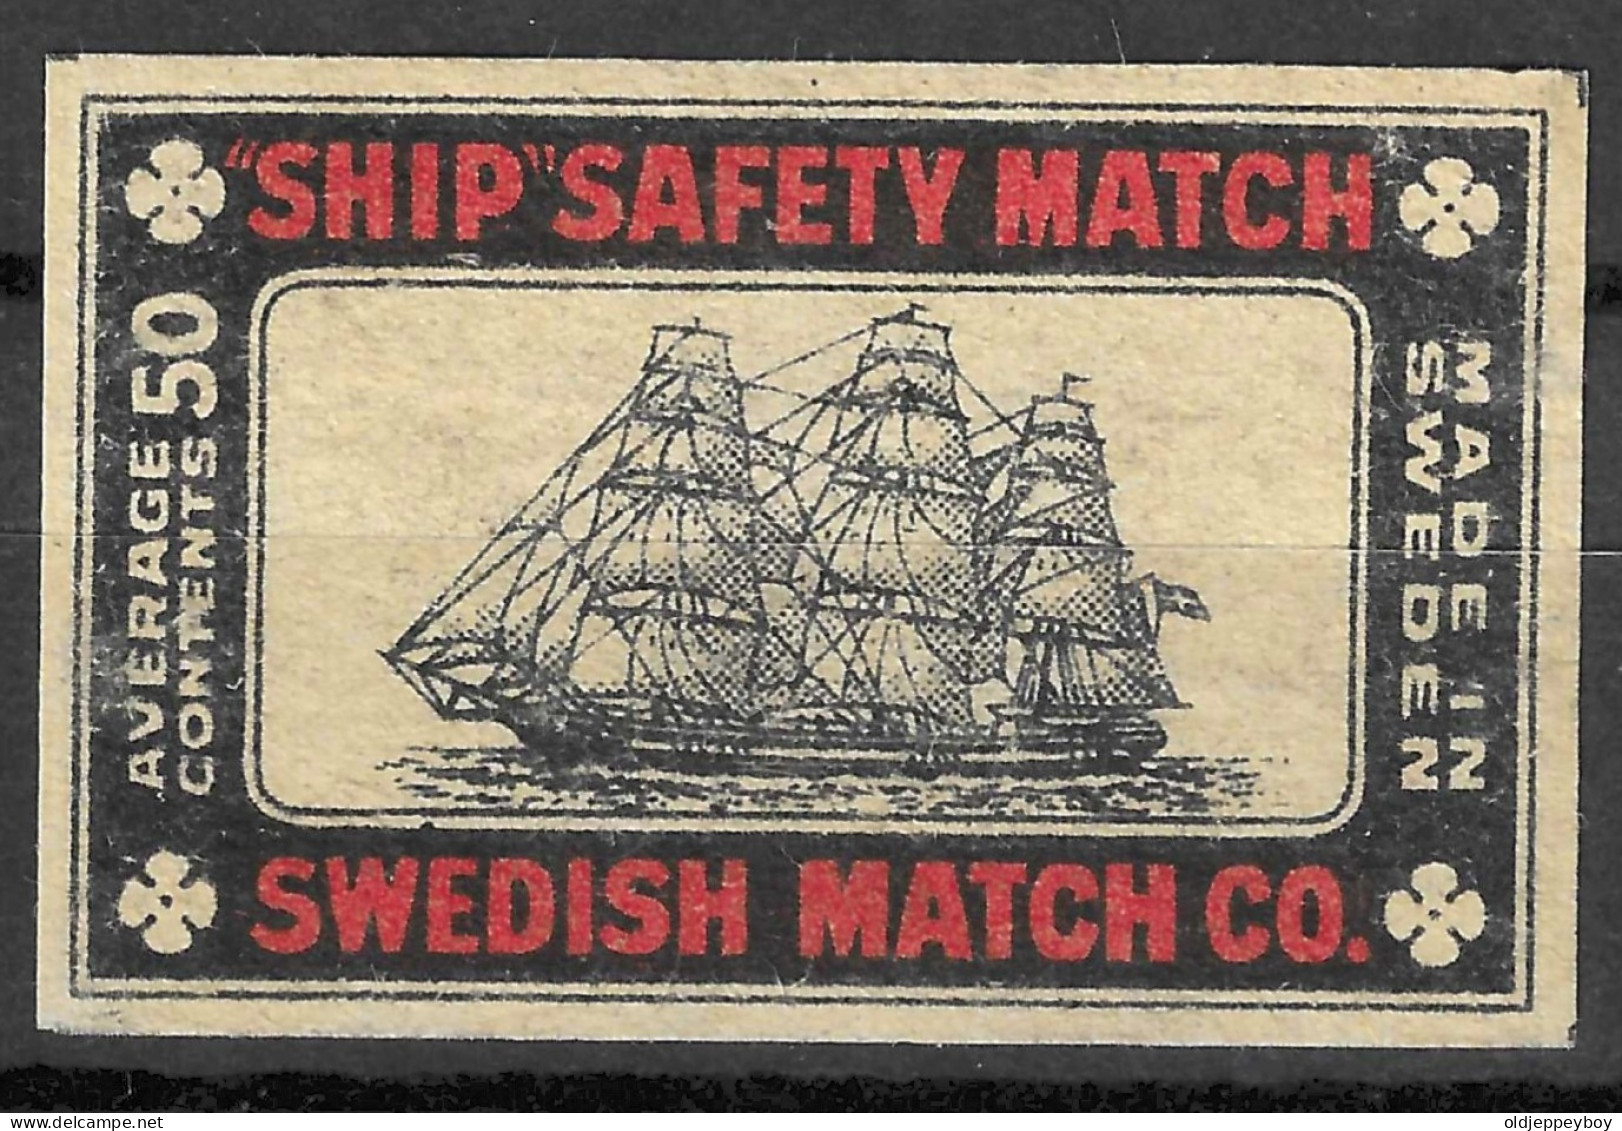 MADE IN SWEDEN VINTAGE Phillumeny MATCHBOX LABEL "SHIP" SWEDISH MATCH CO.   5.5  X 3.5 CM  RARE - Boites D'allumettes - Etiquettes